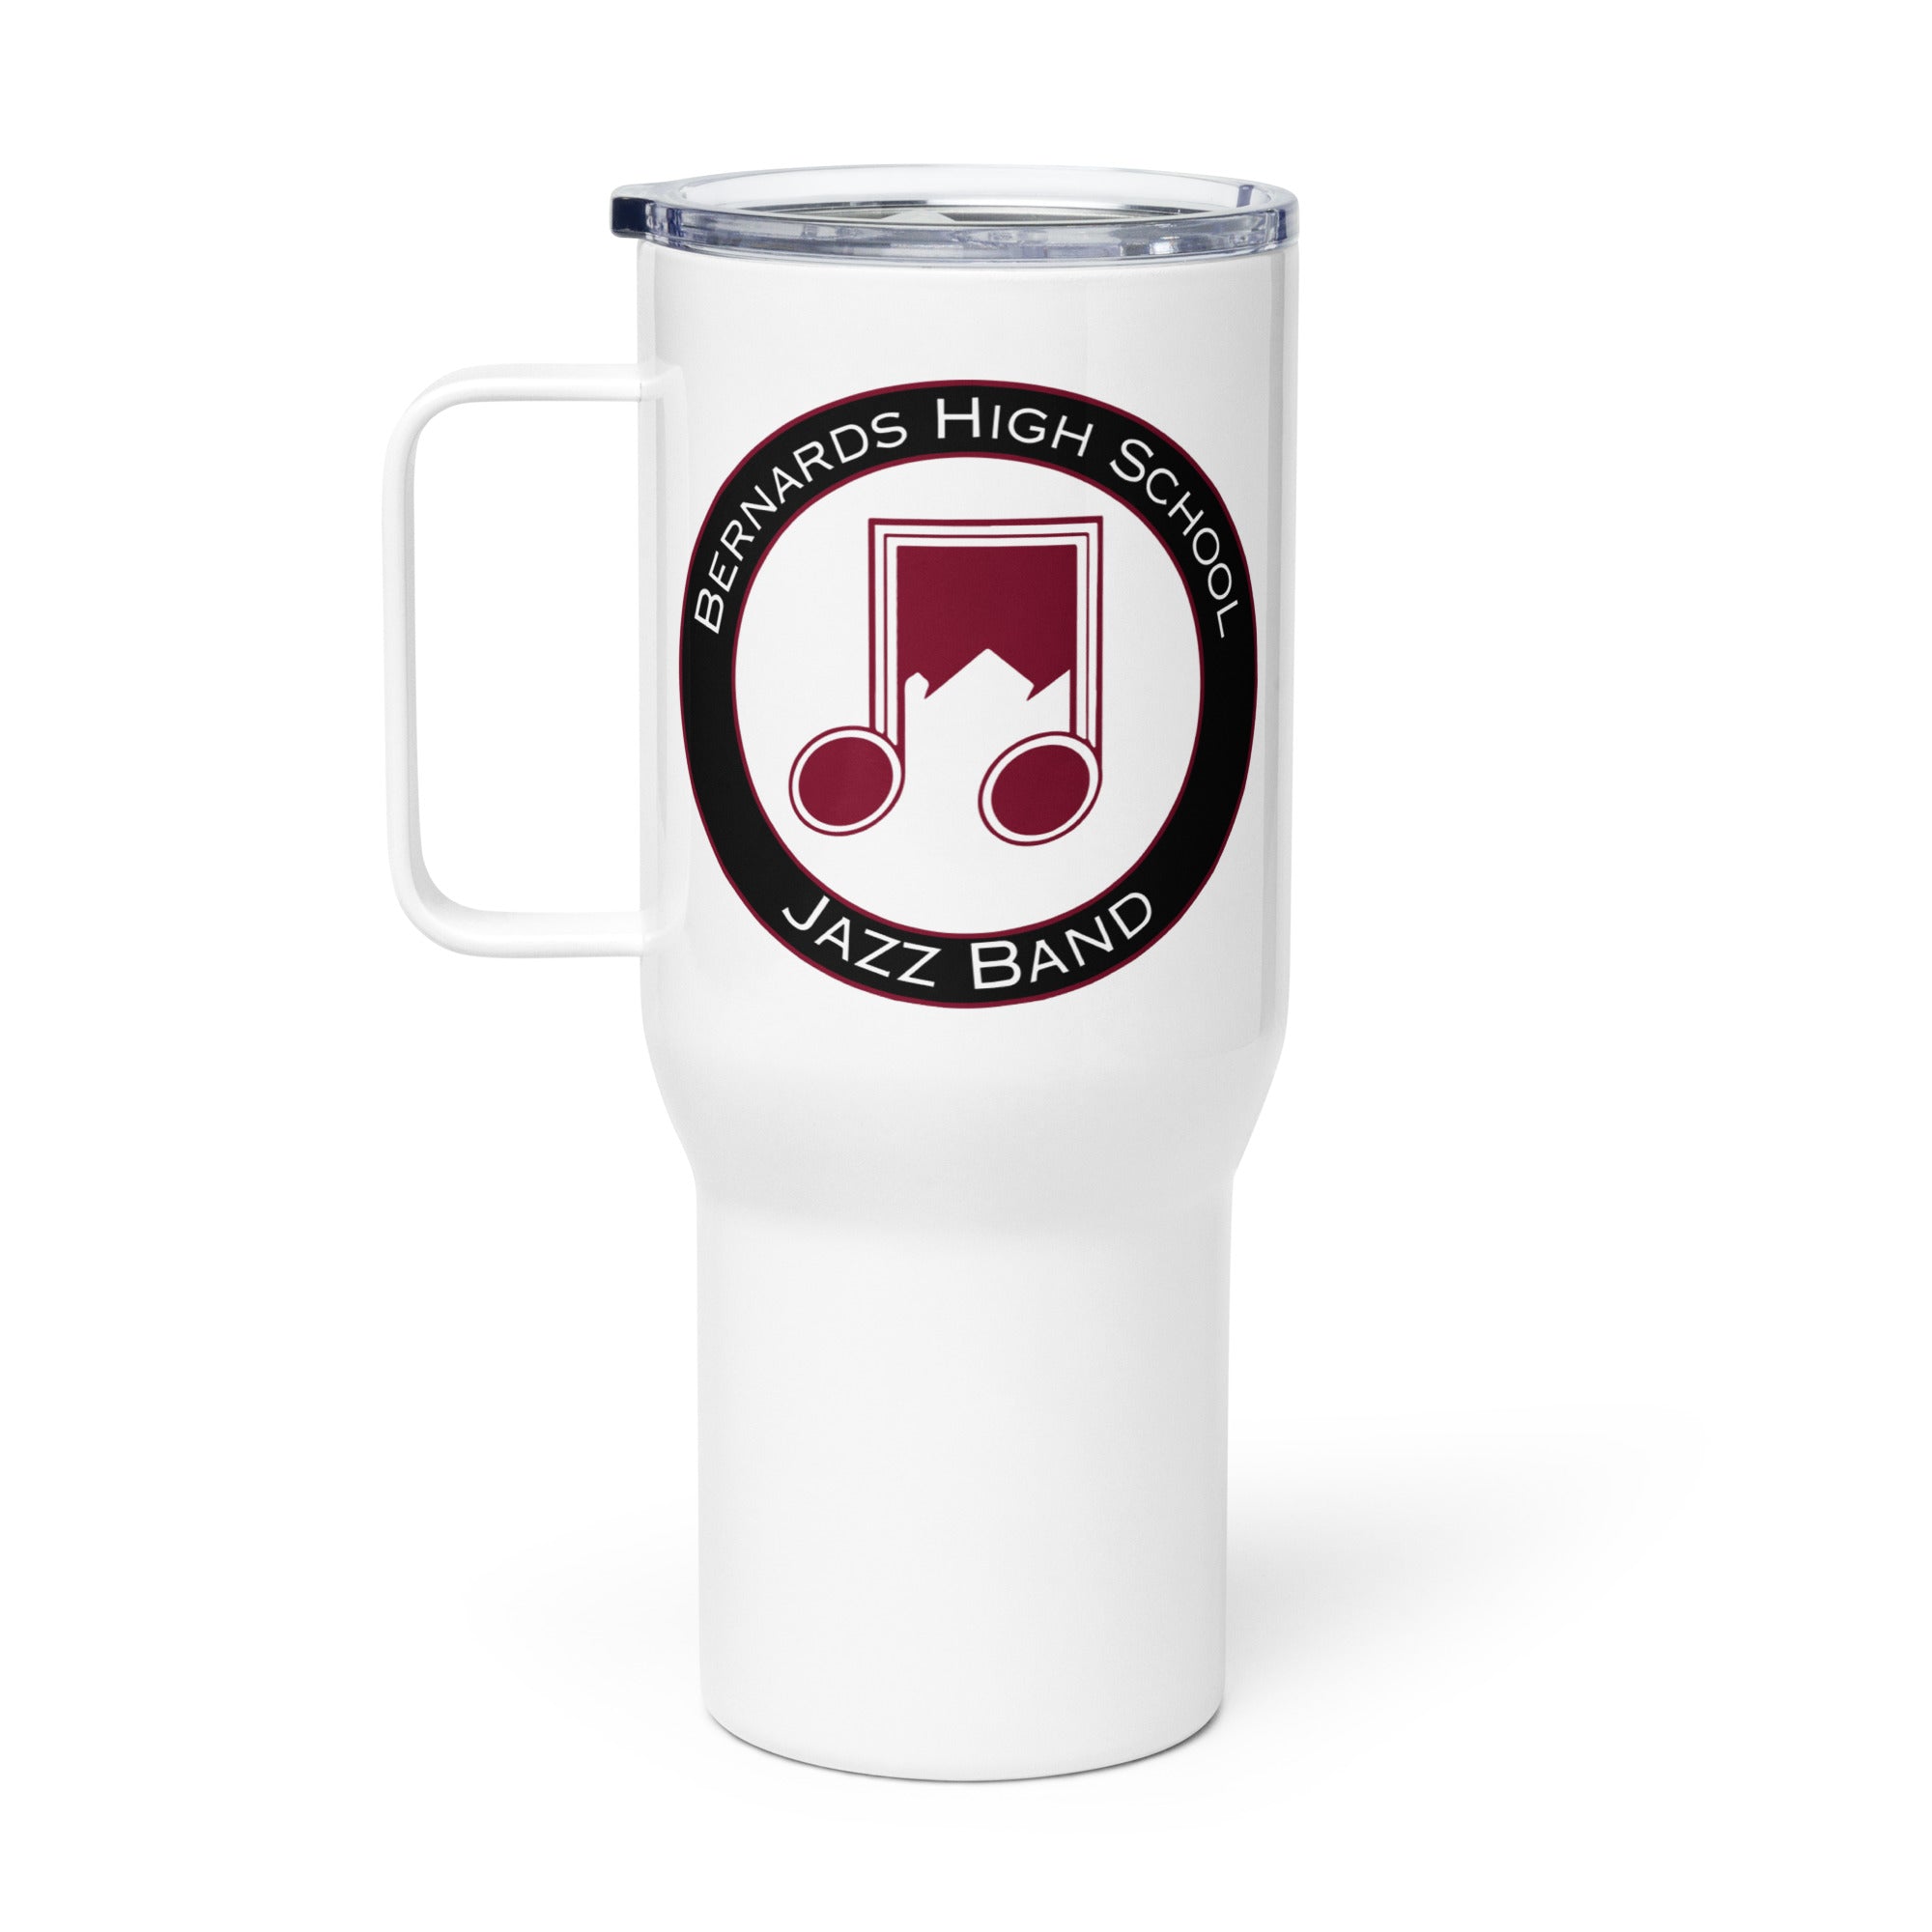 BHS Band Jazz Travel mug with a handle